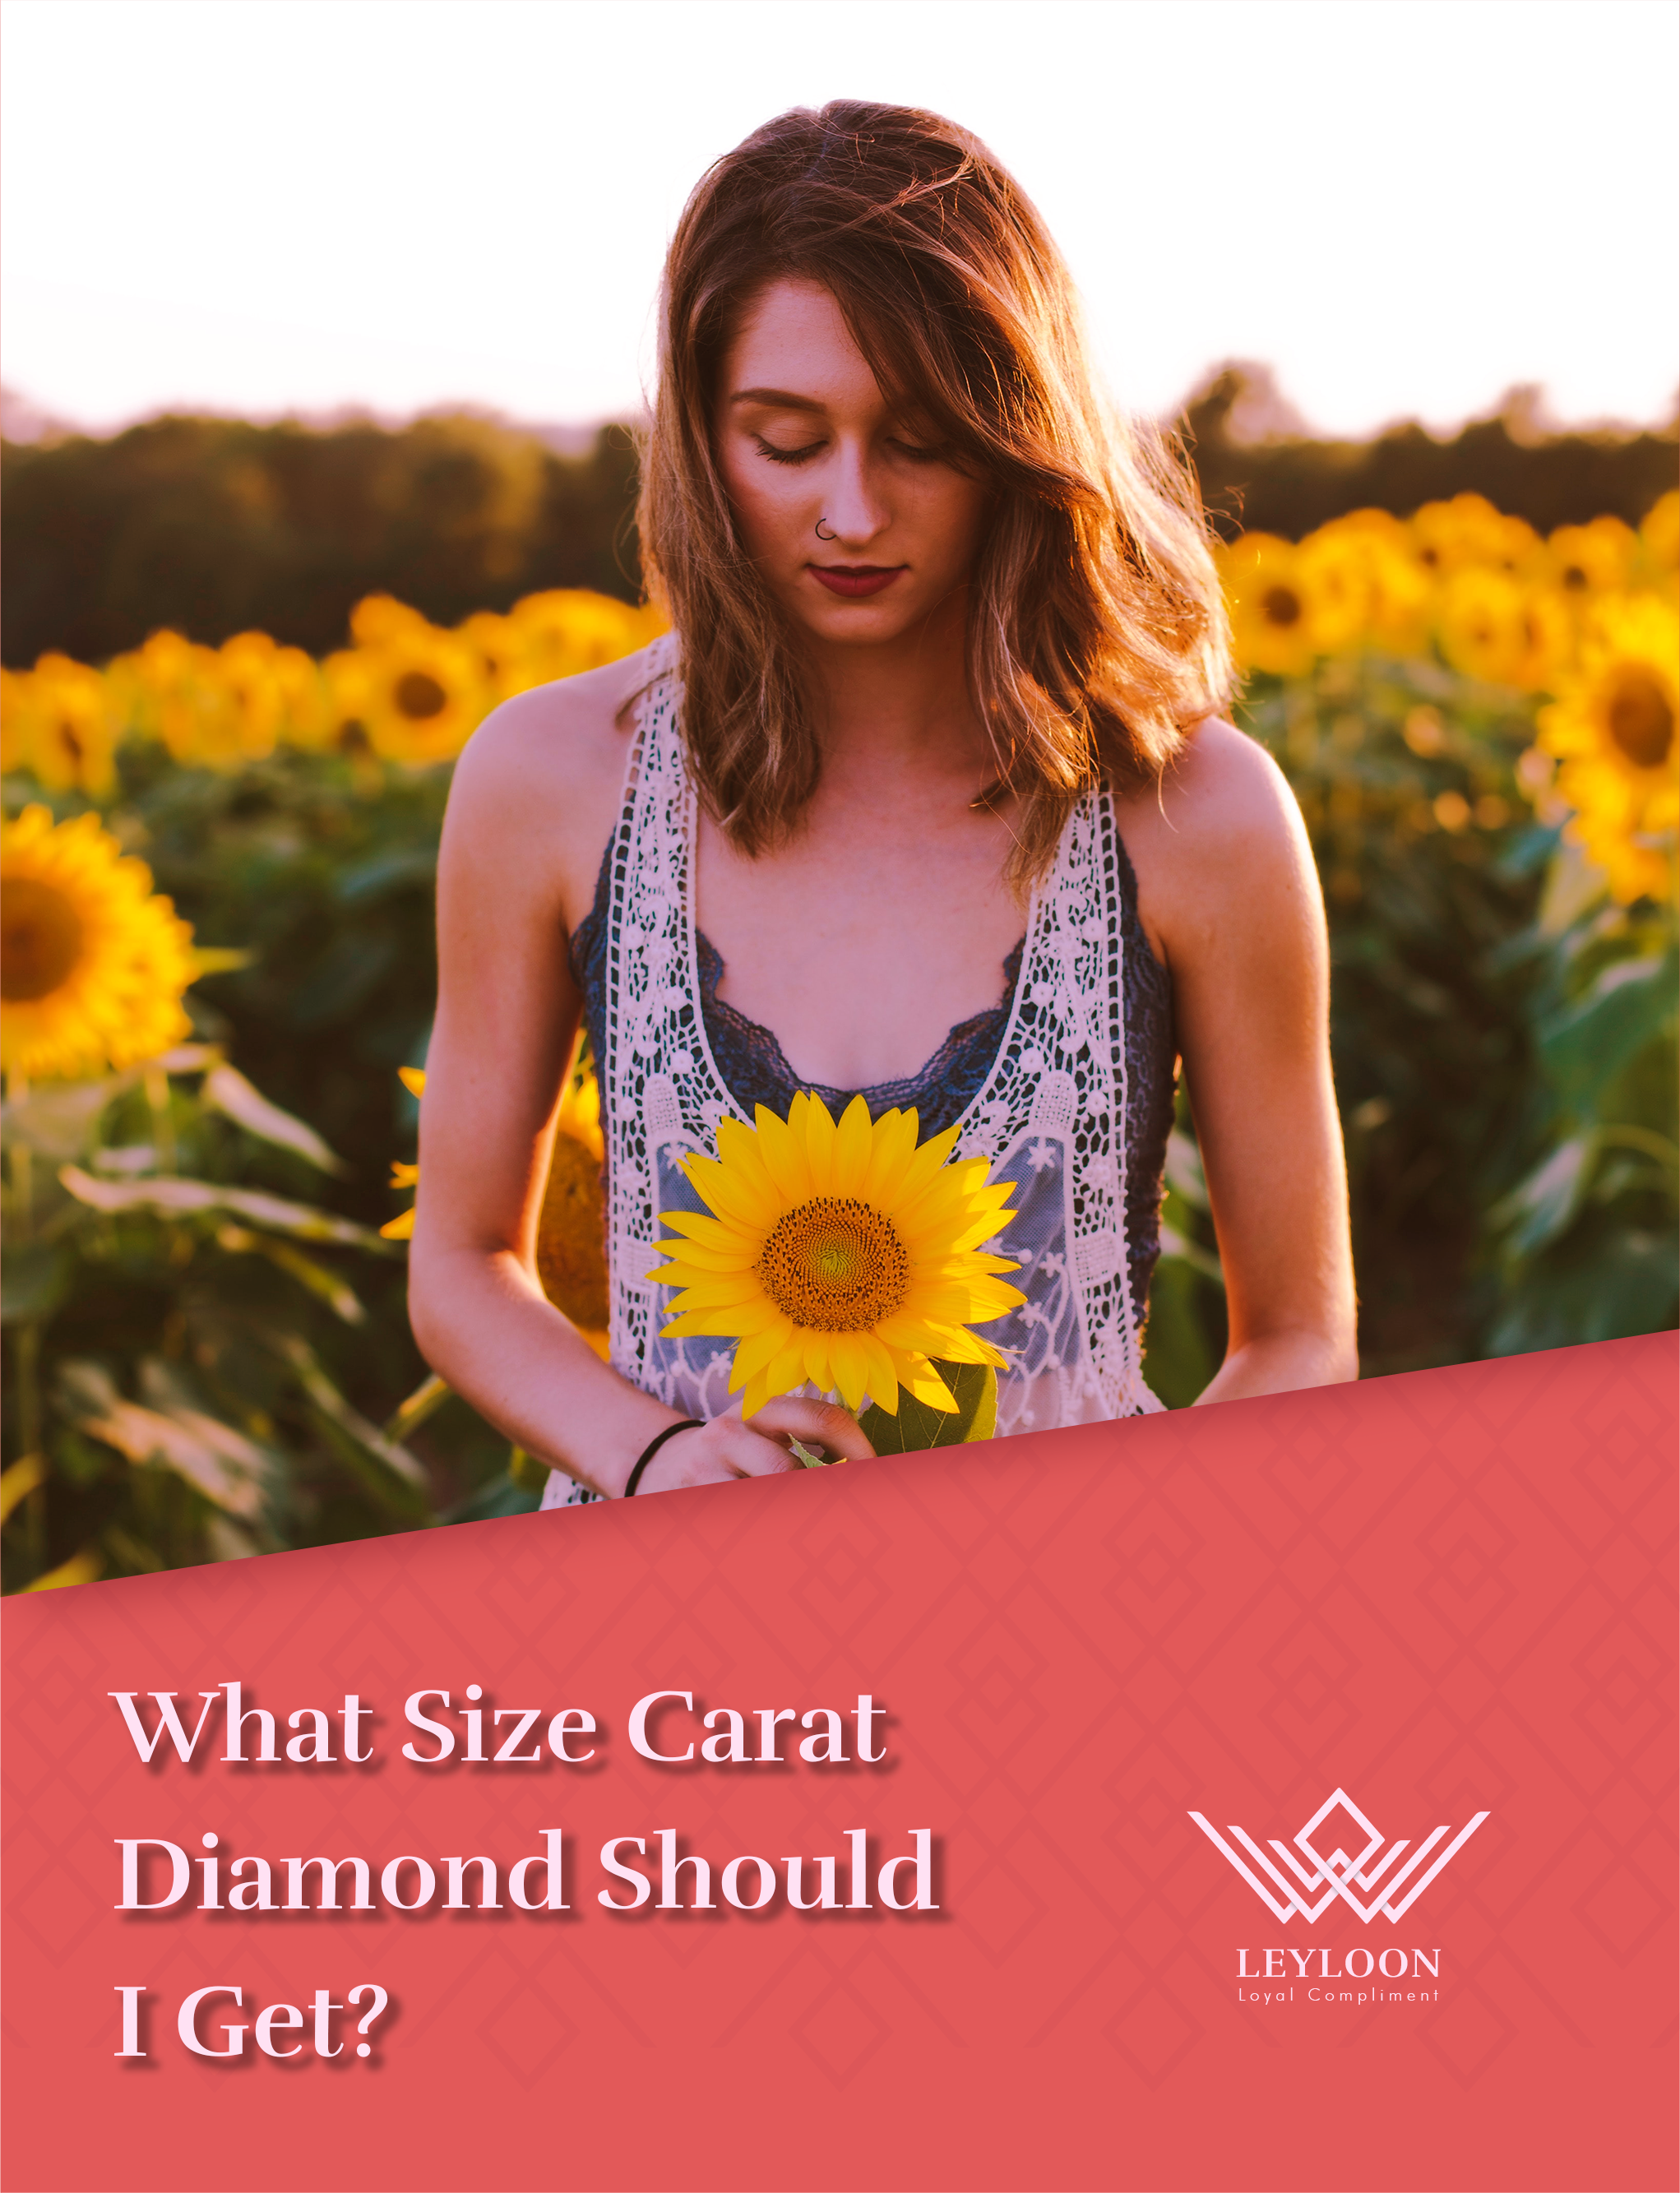 What Size Carat Diamond Should I Get?